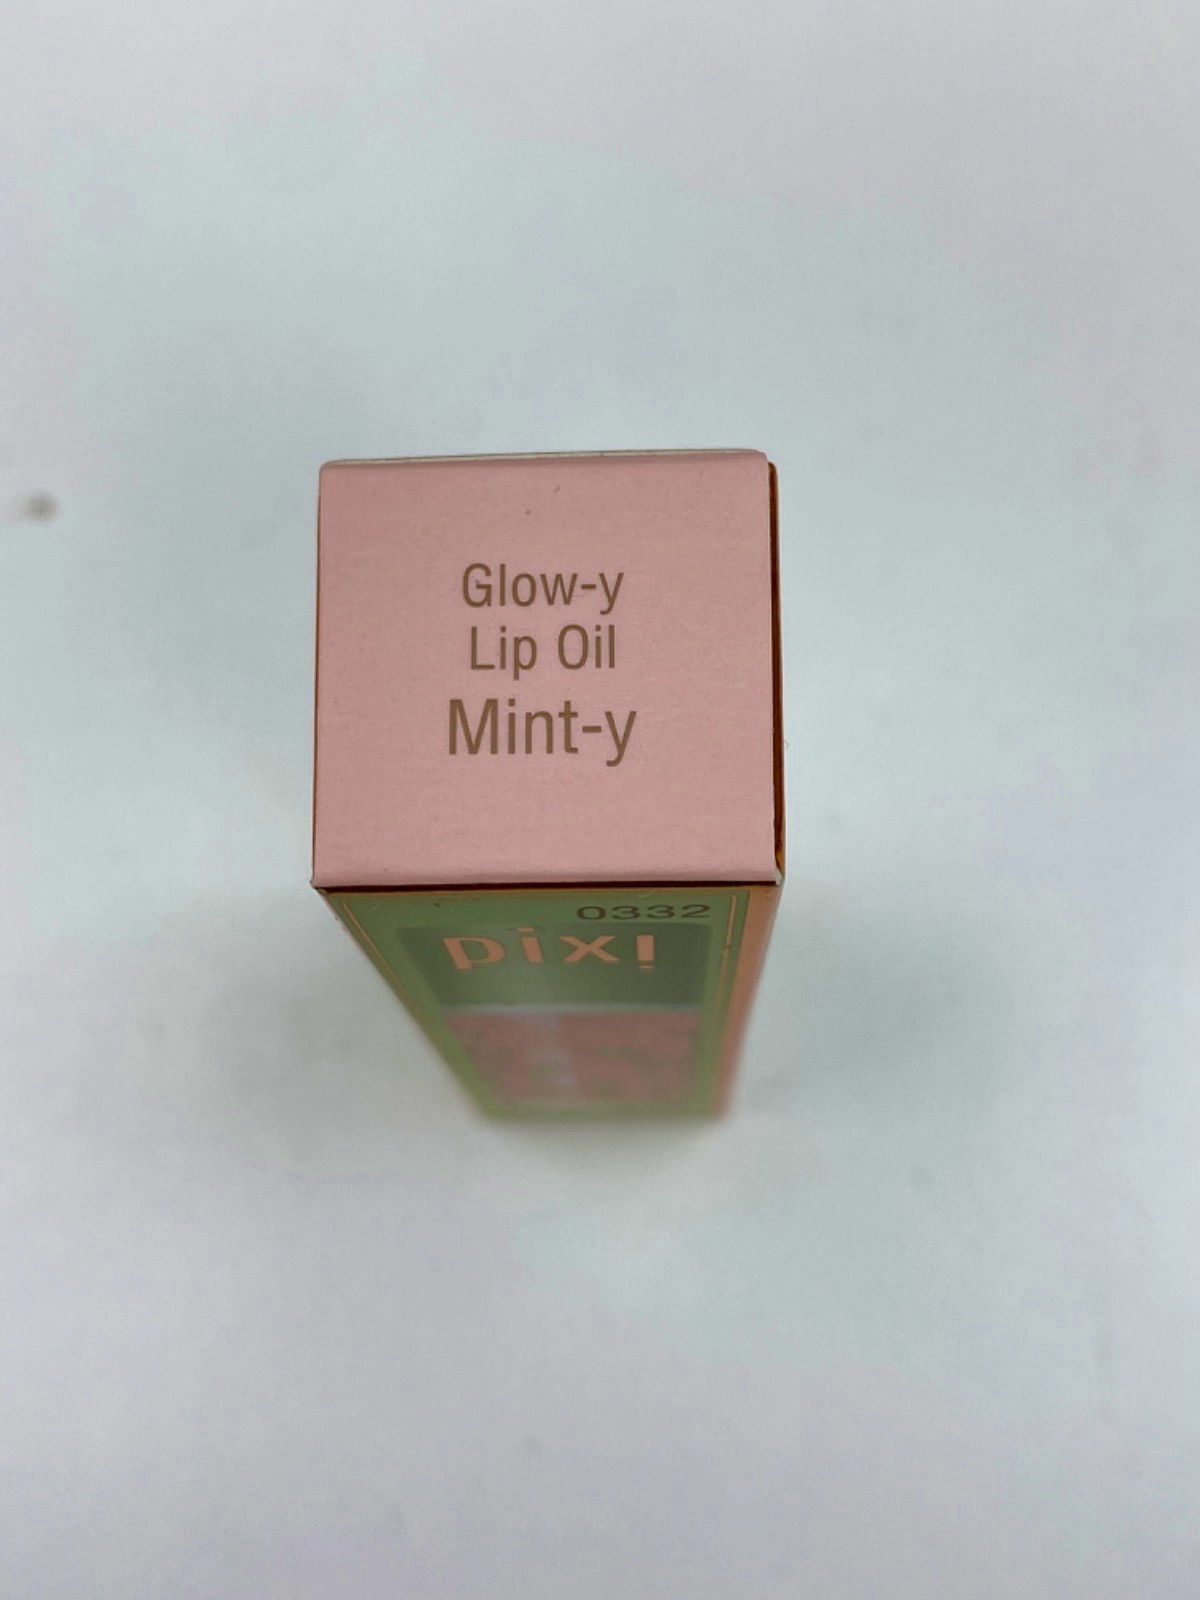 Pixi Glowy Lip Oil Mint-y 5.5g